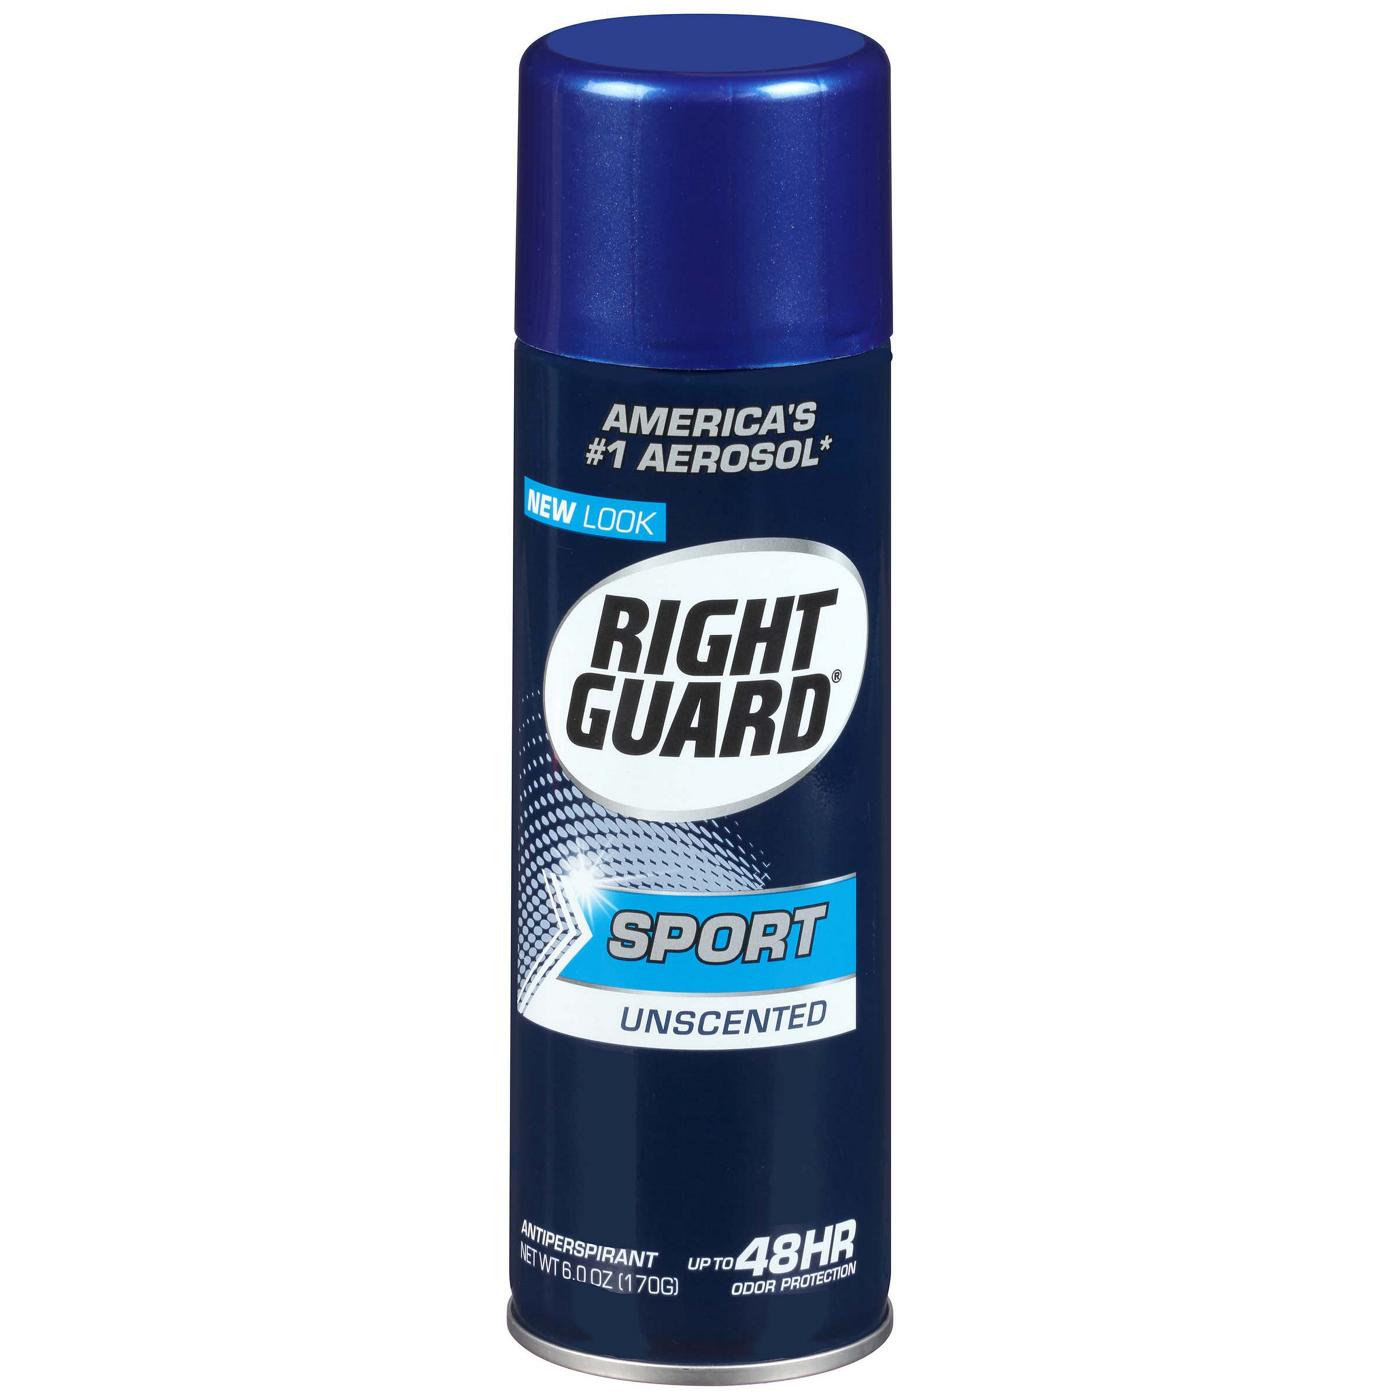 Right Guard Sport Antiperspirant Deodorant Spray - Unscented; image 1 of 3